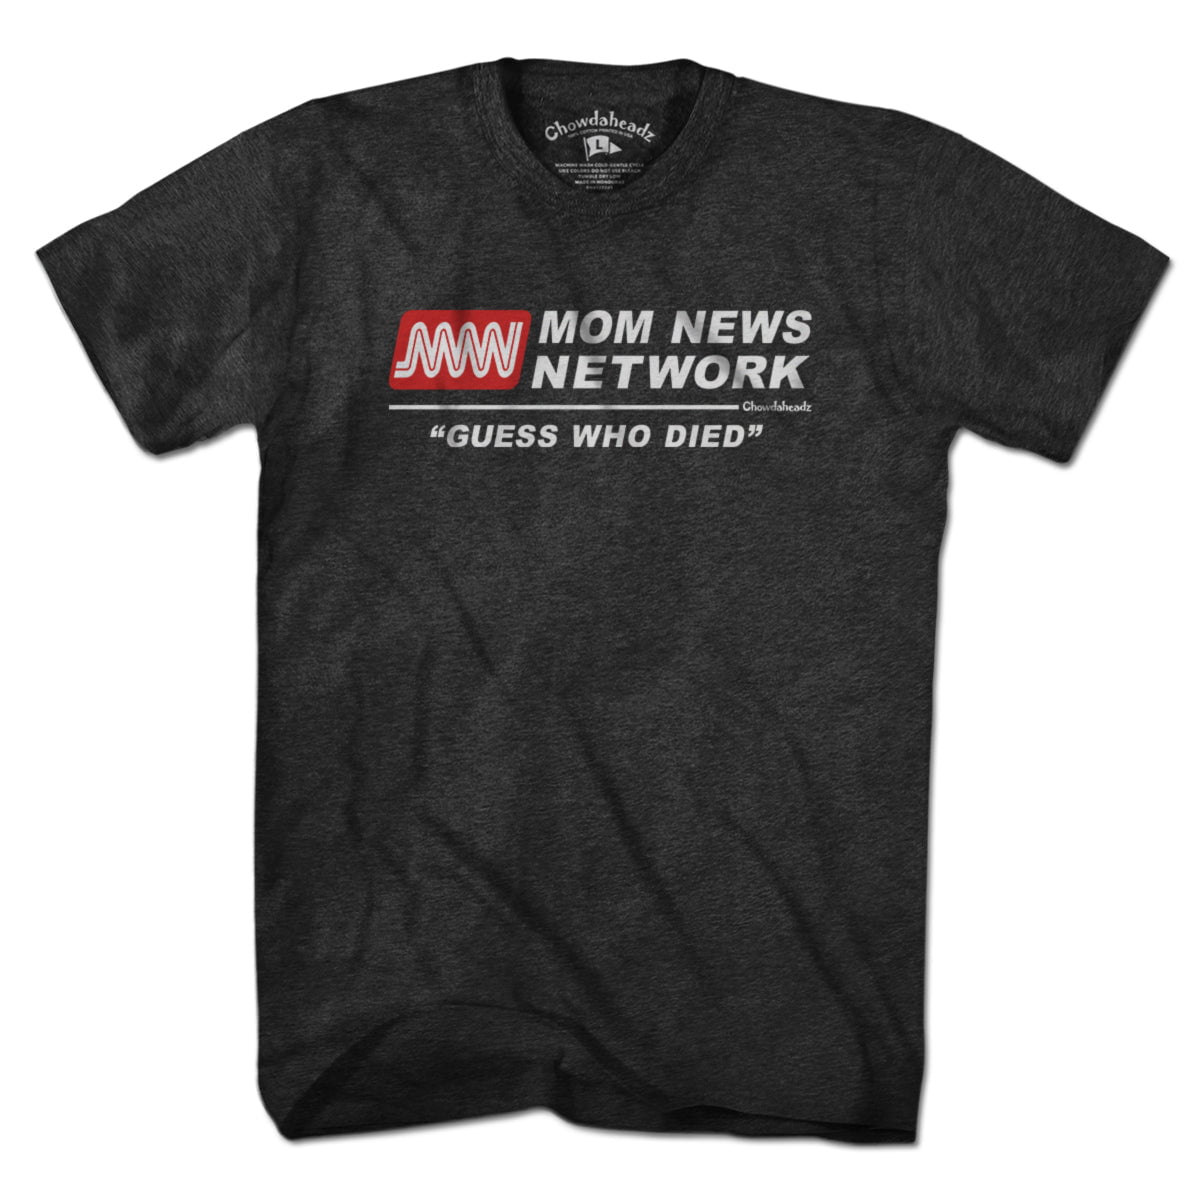 Mom News Network T-Shirt - Chowdaheadz